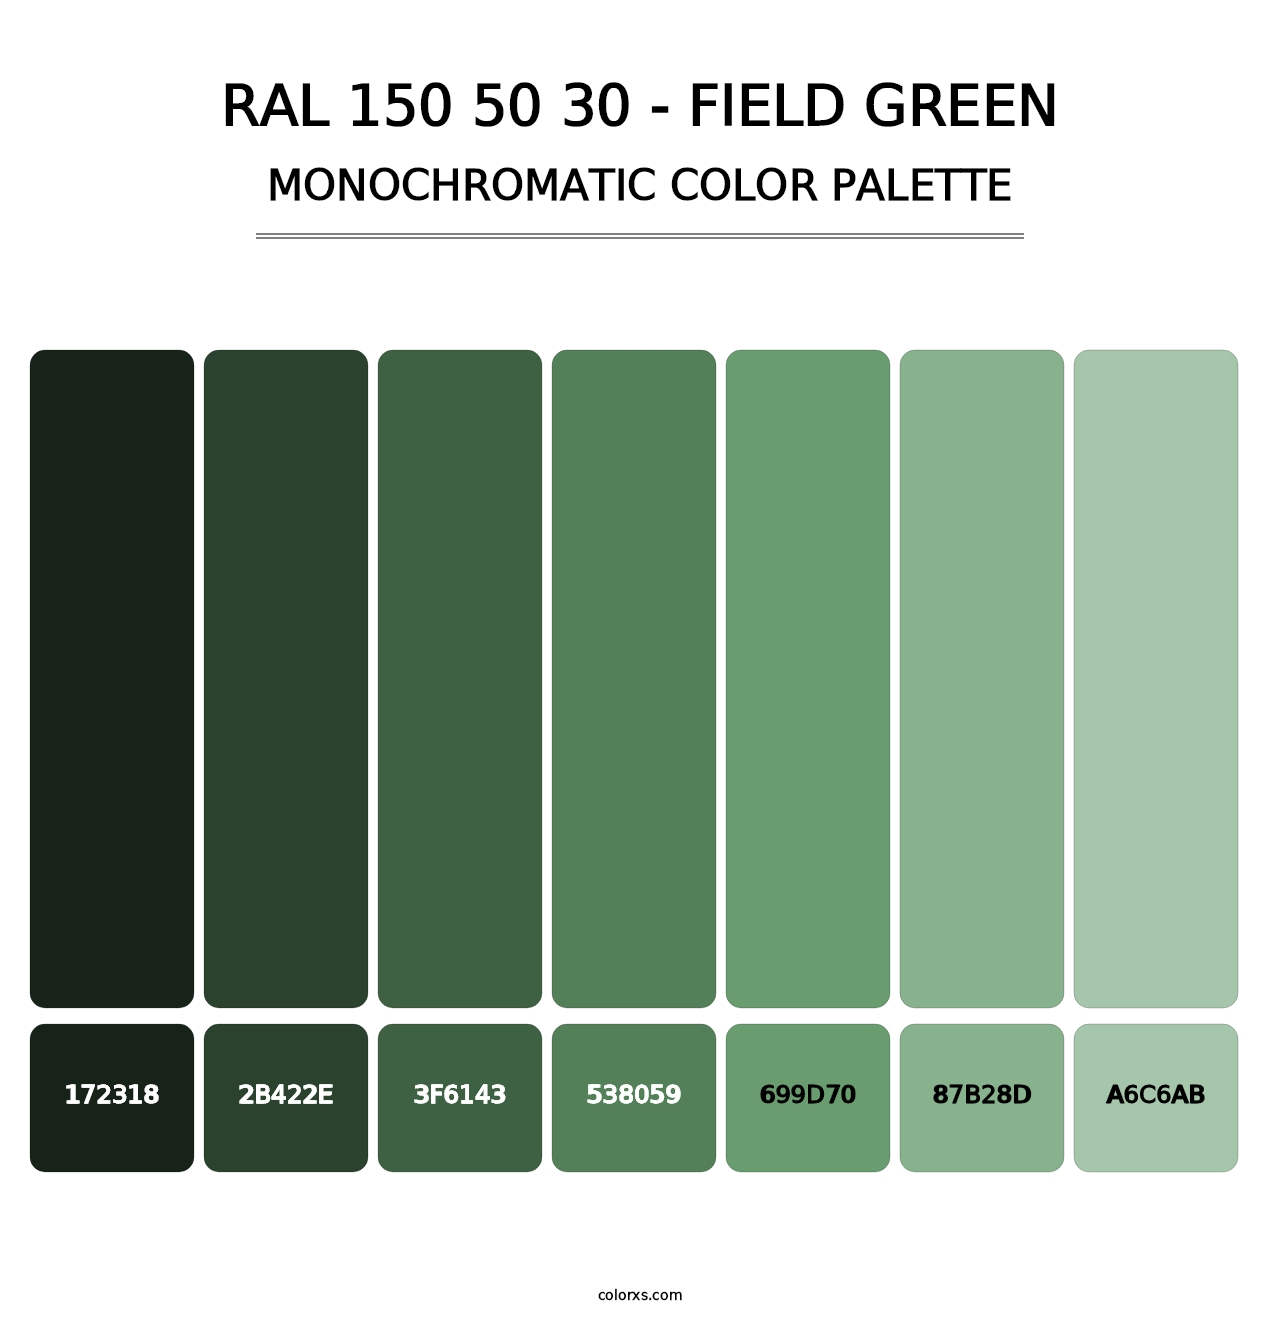 RAL 150 50 30 - Field Green - Monochromatic Color Palette